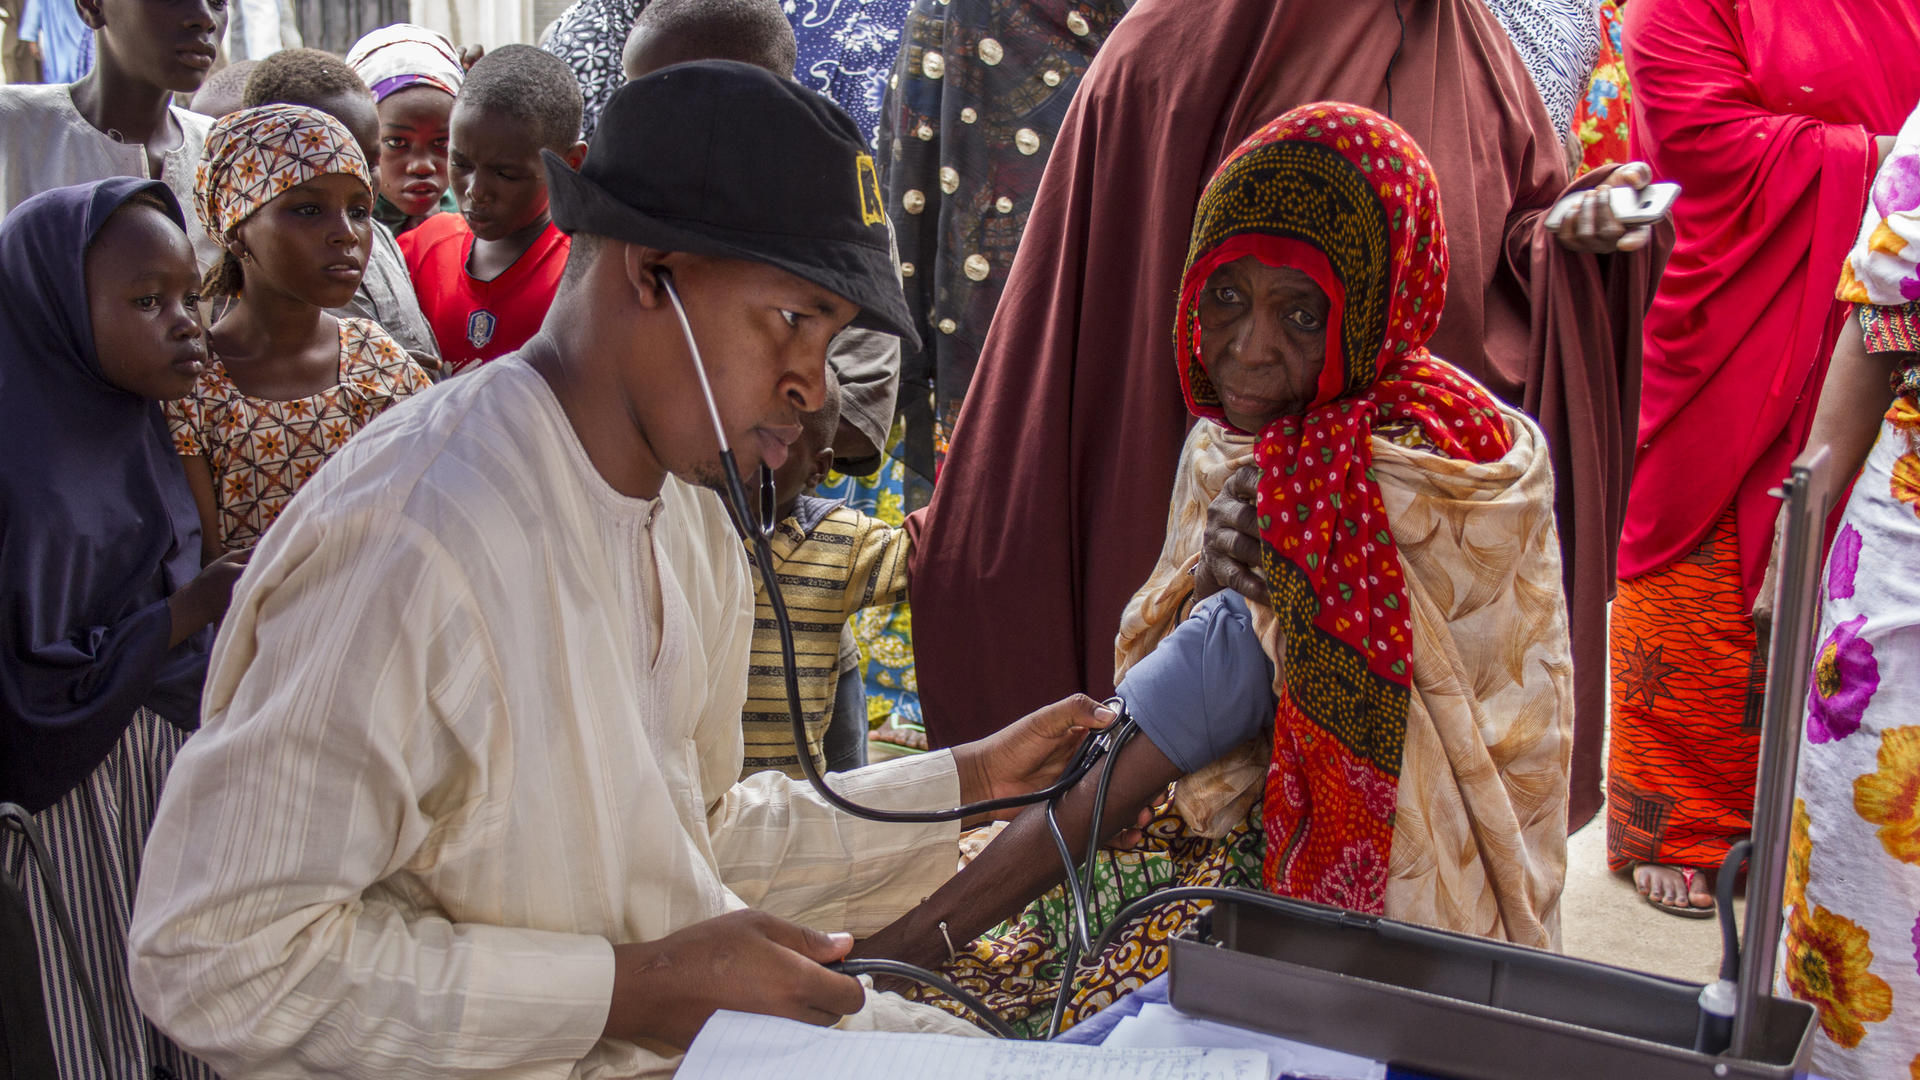 An IRC health worker checks an elderly woman's blood pressure 